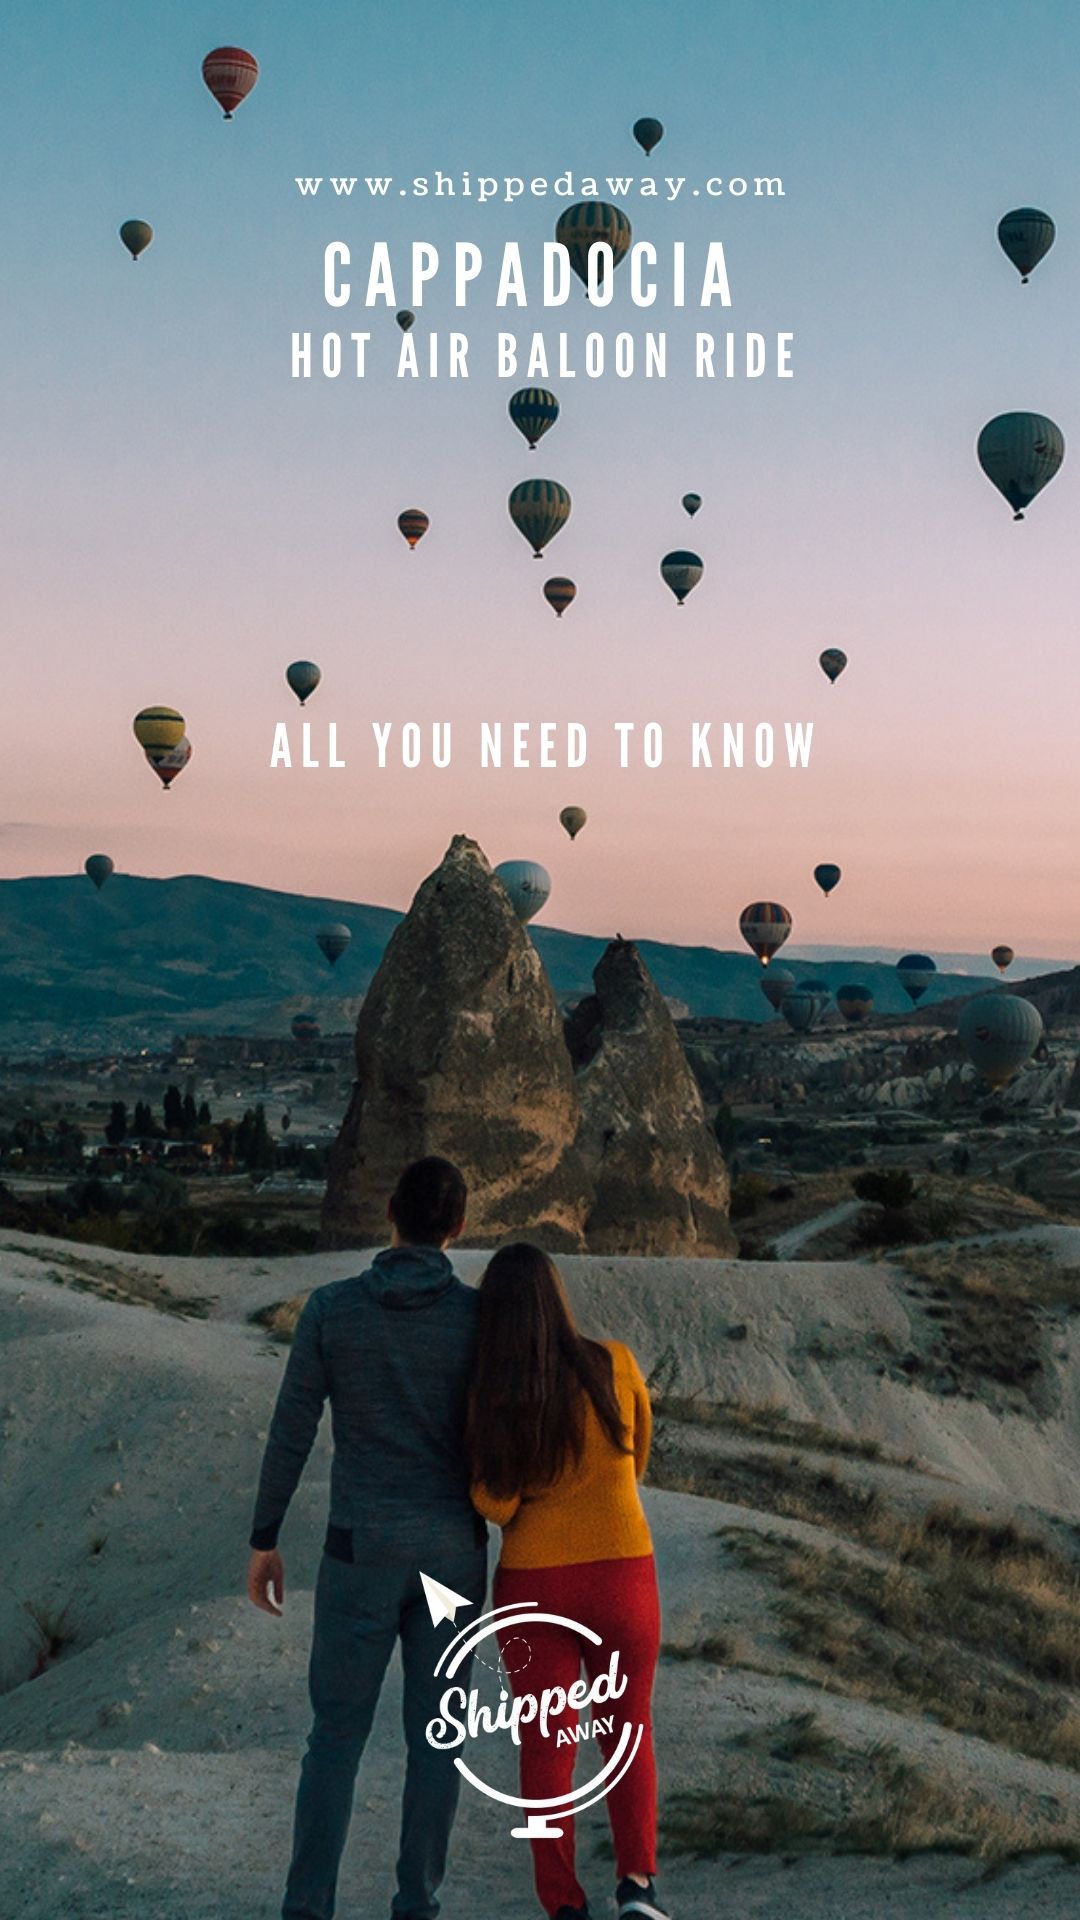 Cappadocia Hot Air Balloon Ride - All you need to know